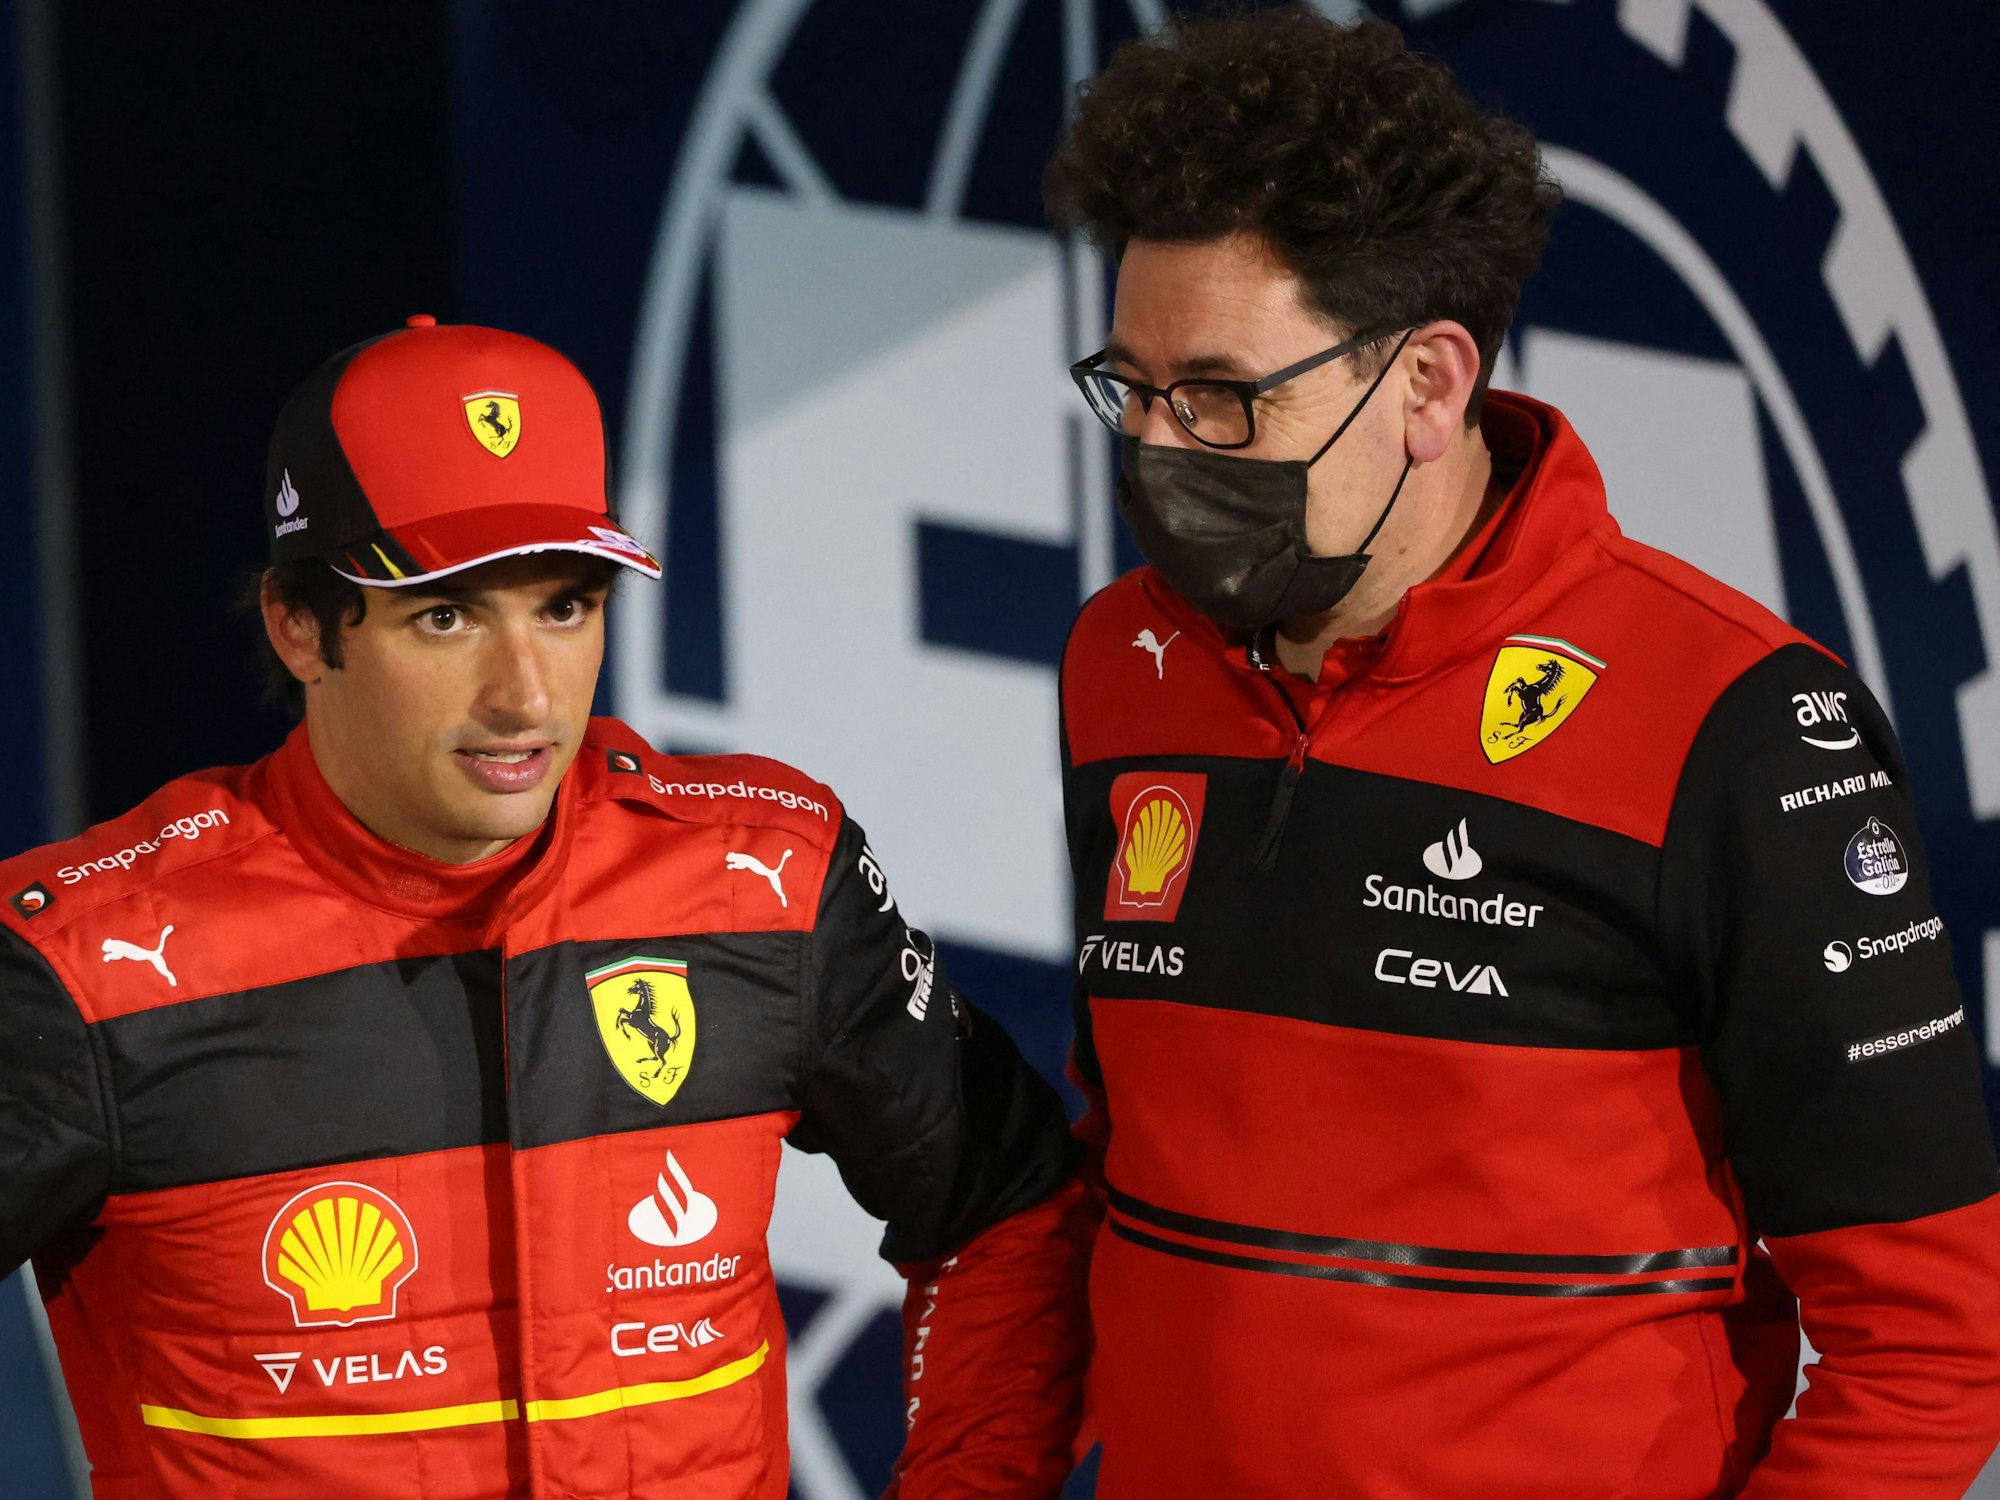 Ferrari-Pilot Carlos Sainz und Teamchef Mattia Binotto.